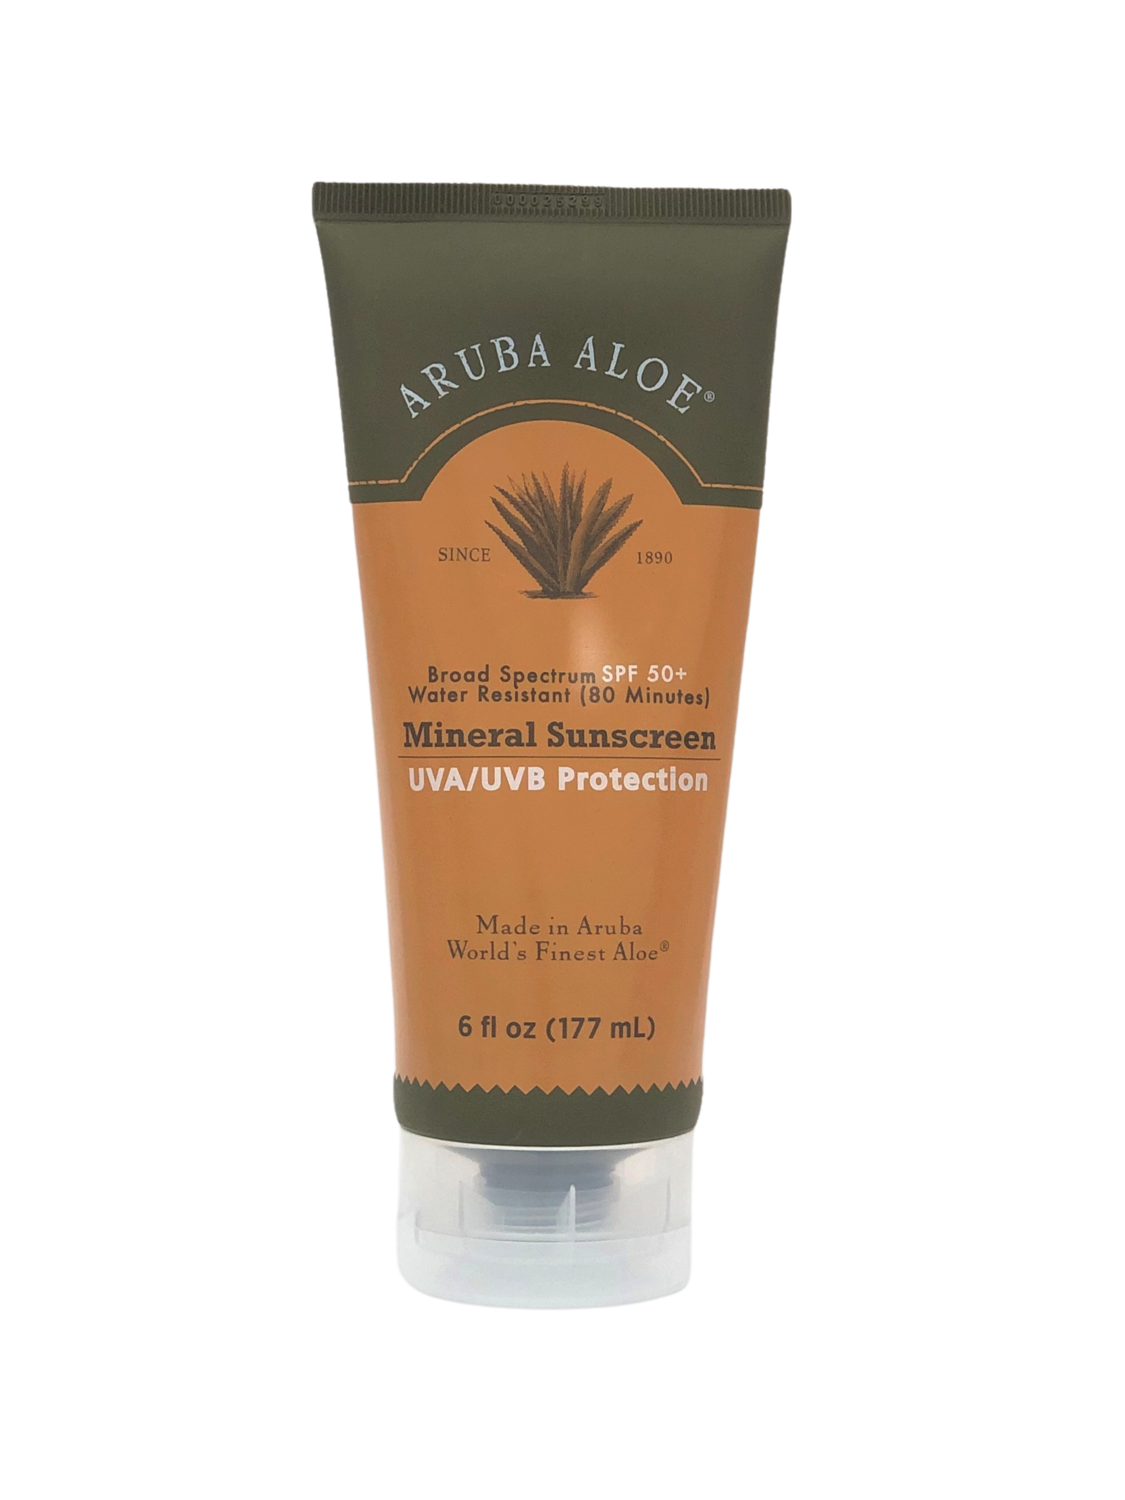 Aruba Aloe Broad Spectrum SPF 50+ Mineral Sunscreen